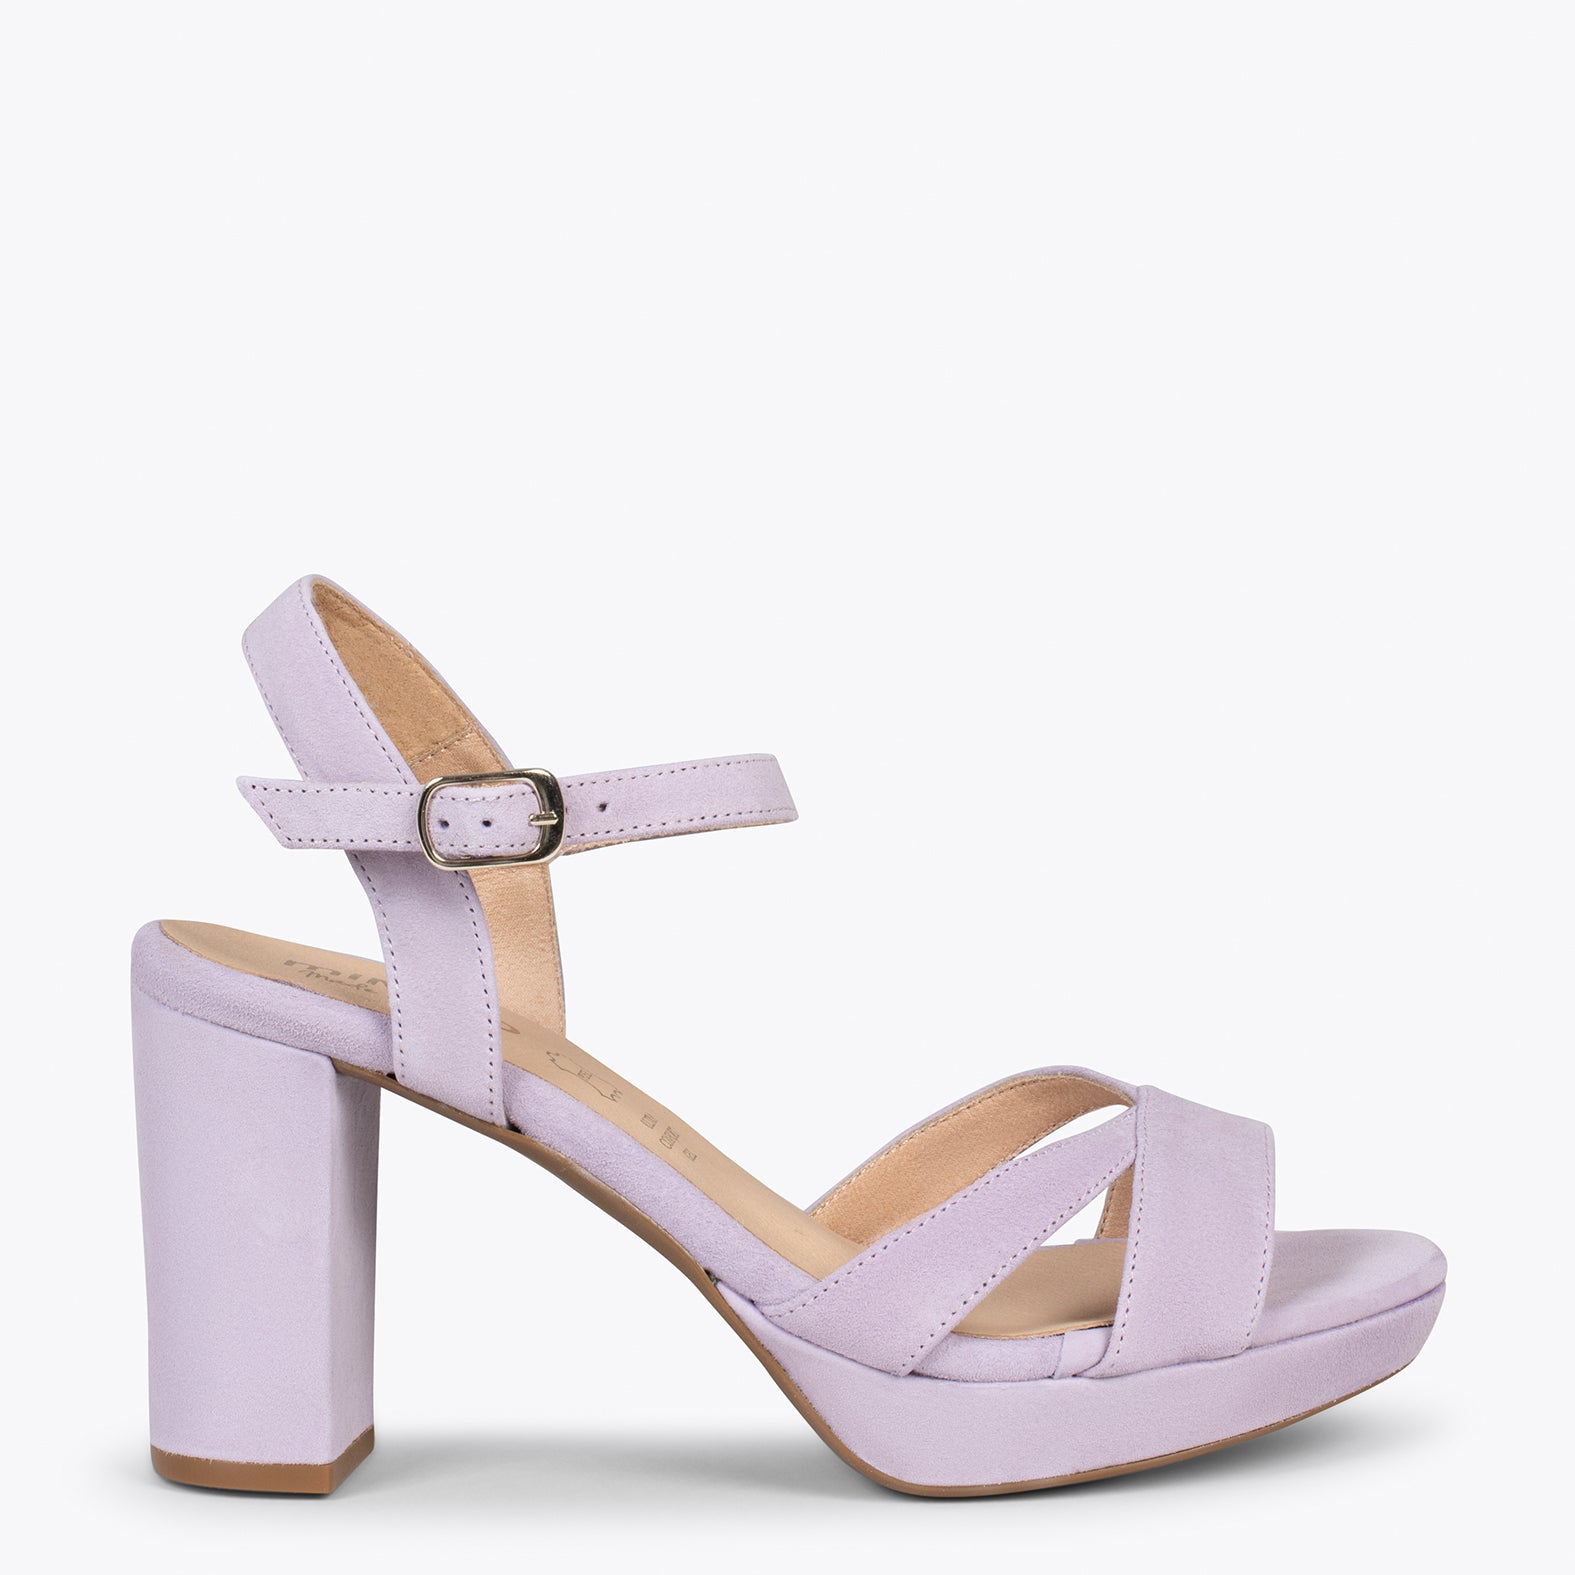 PARIS – LAVENDER high heel sandal with platform